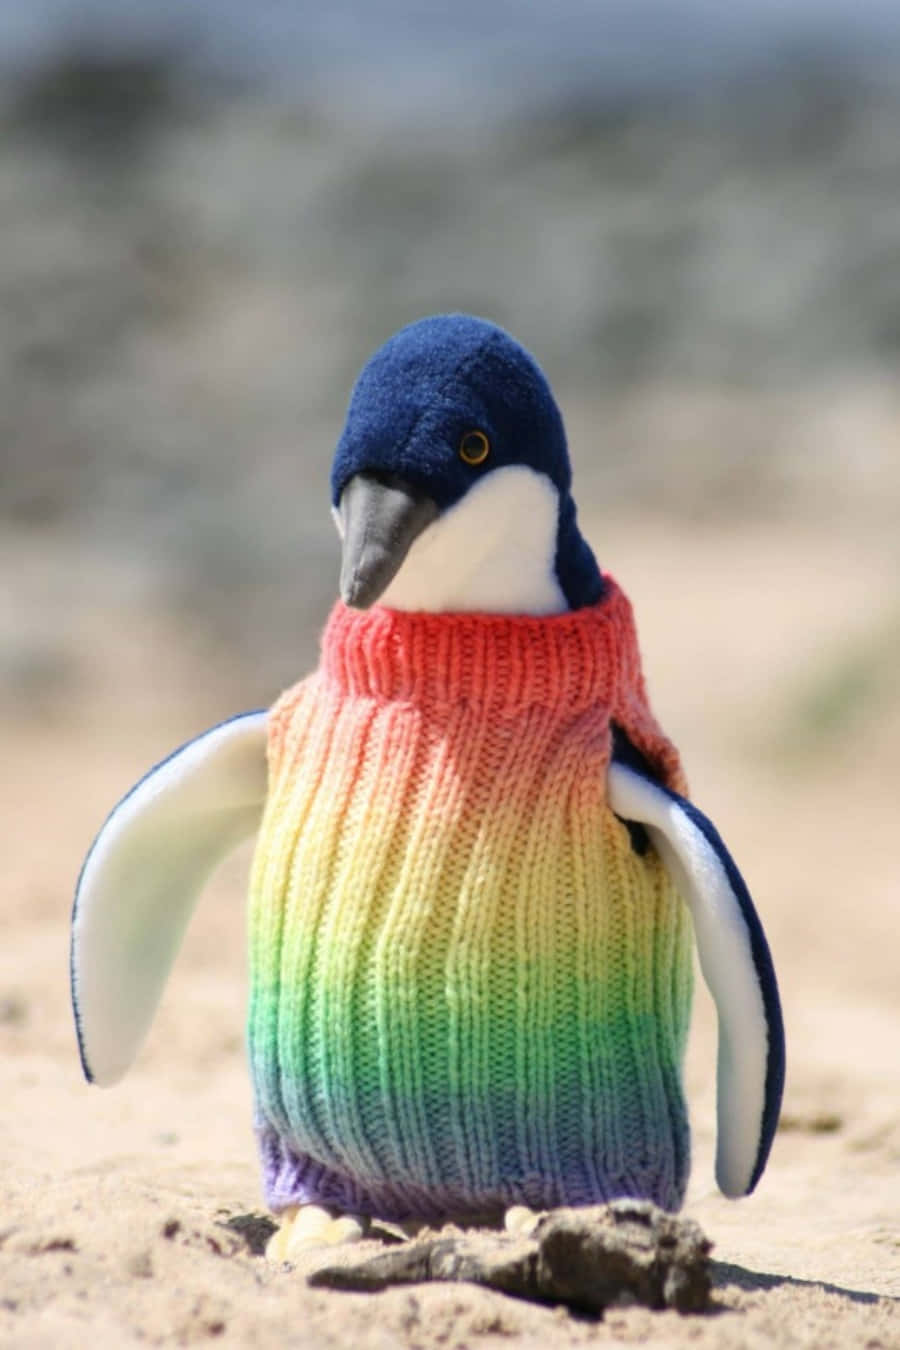 Imagende Un Pingüino Tierno Tejido Con Arco Iris.